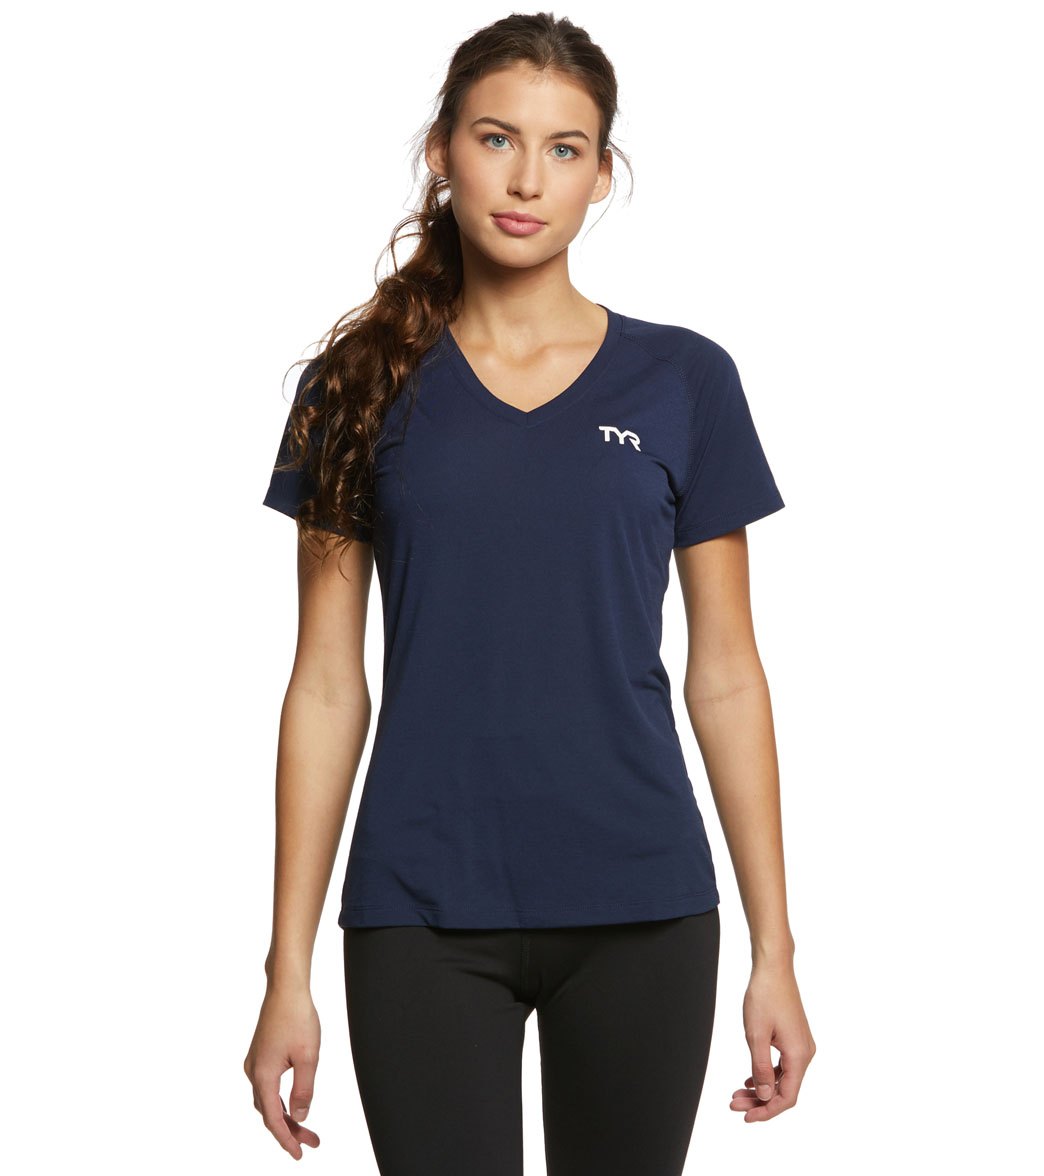 TYR Women's Alliance Tech Tee Shirt - Navy Large Polyester/Spandex - Swimoutlet.com